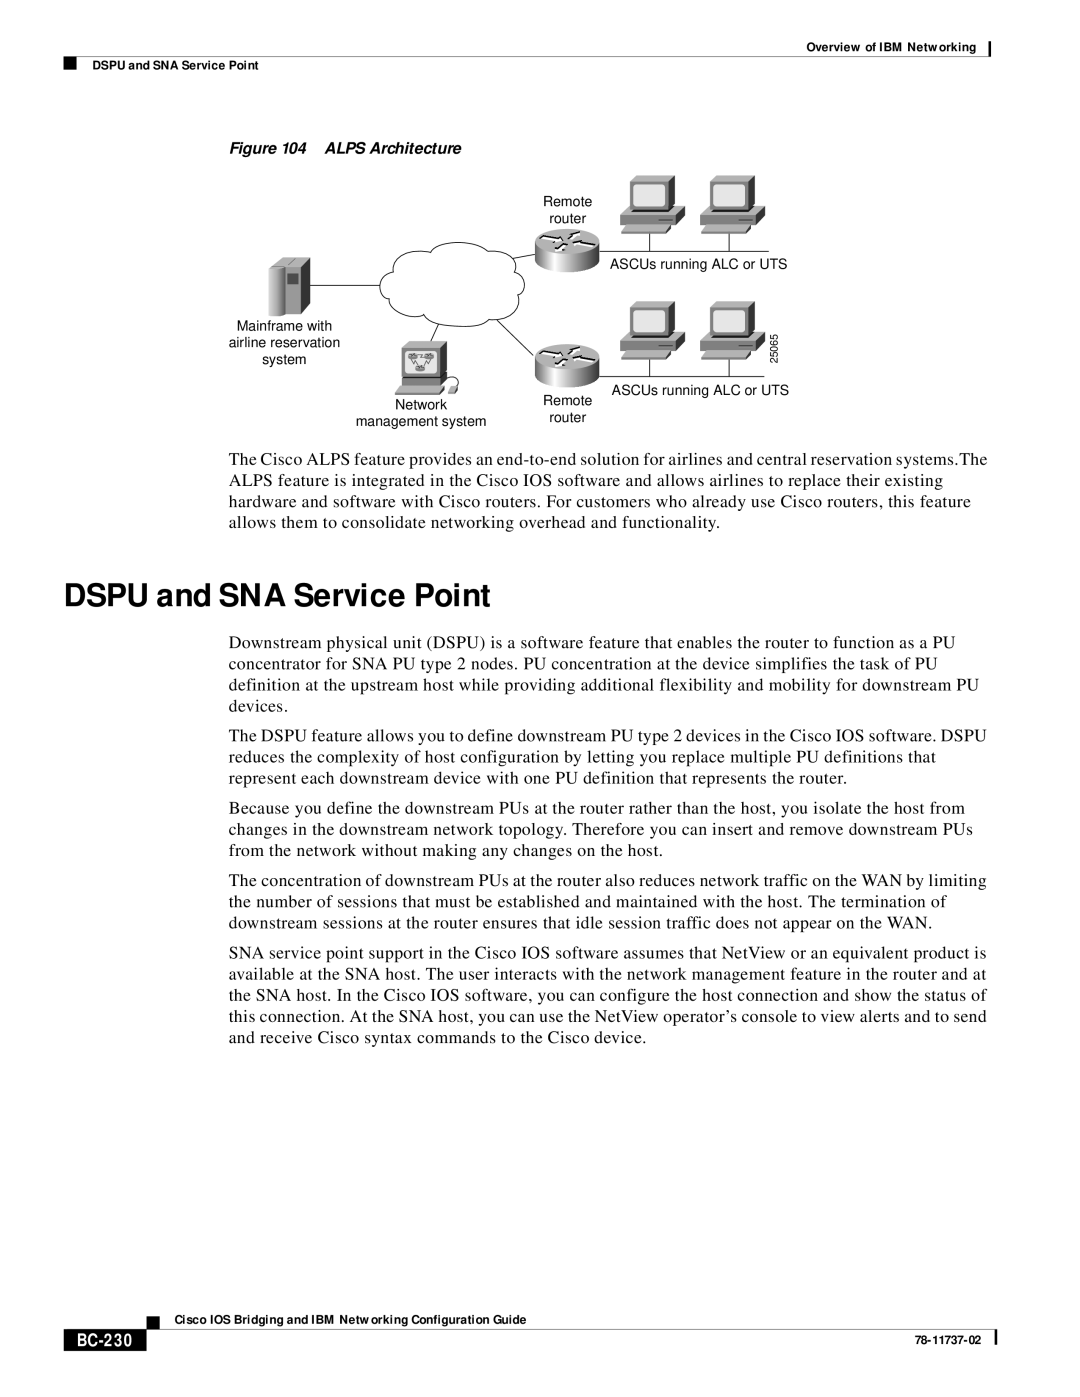 IBM BC-201 manual DSPU and SNA Service Point, BC-230 